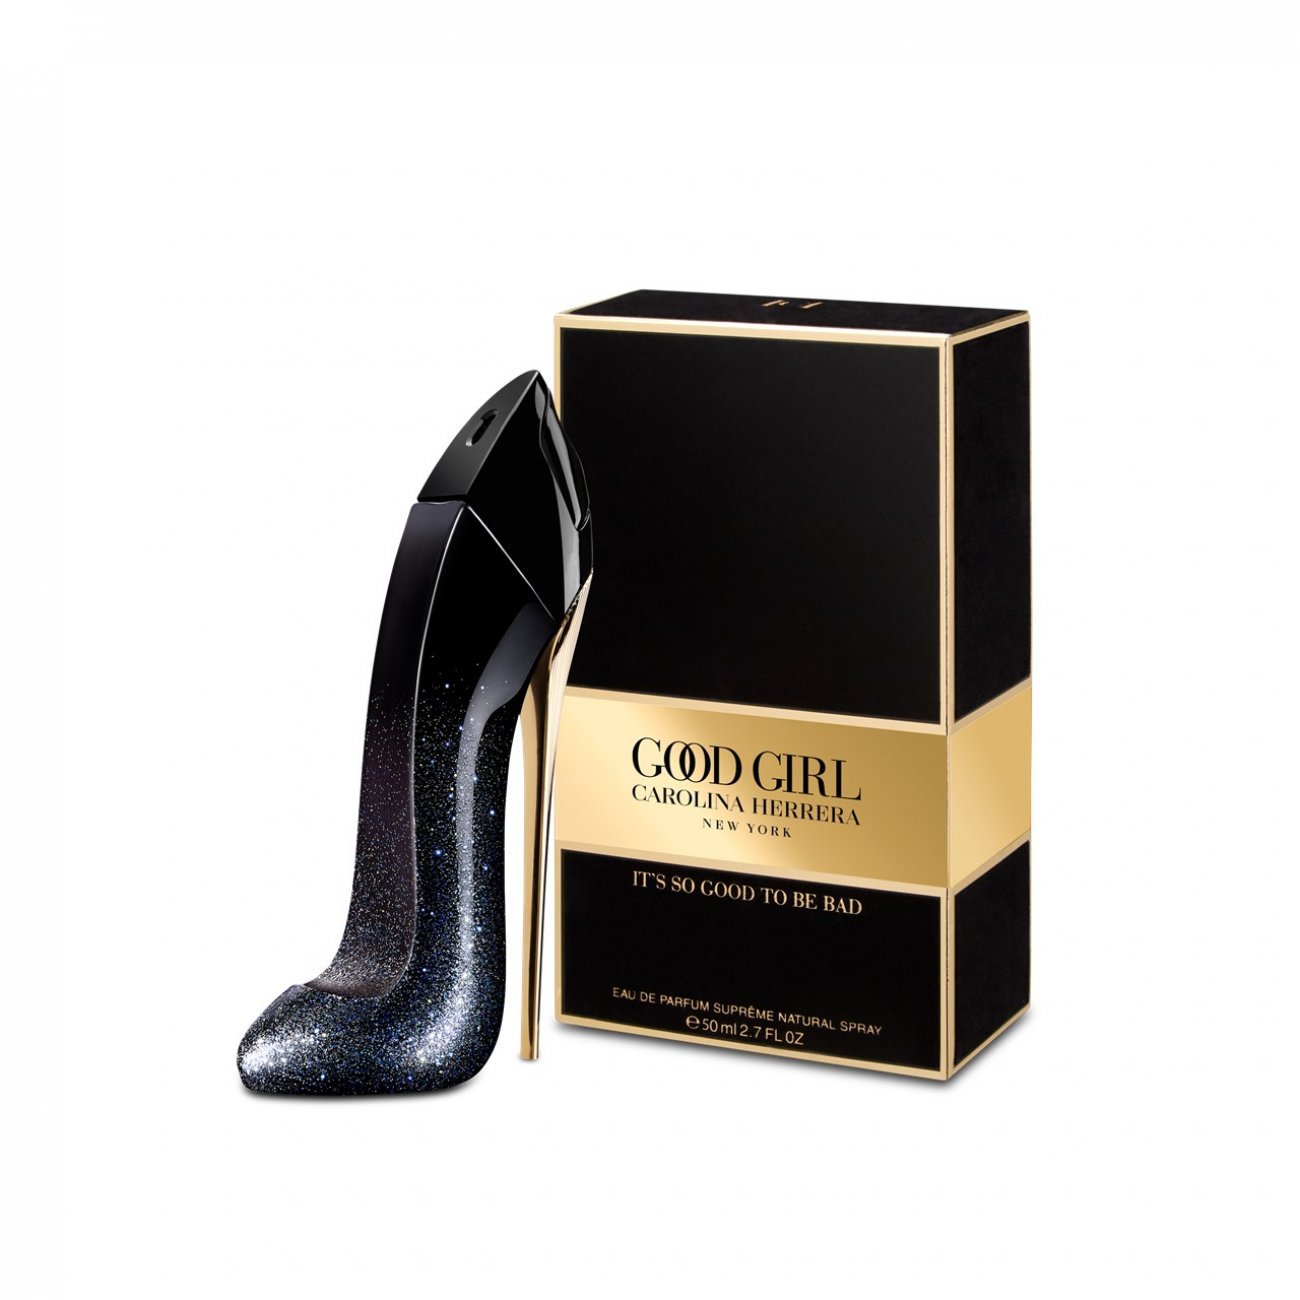 Buy Carolina Herrera Good Girl Eau de Parfum Suprême 50ml (1.7fl